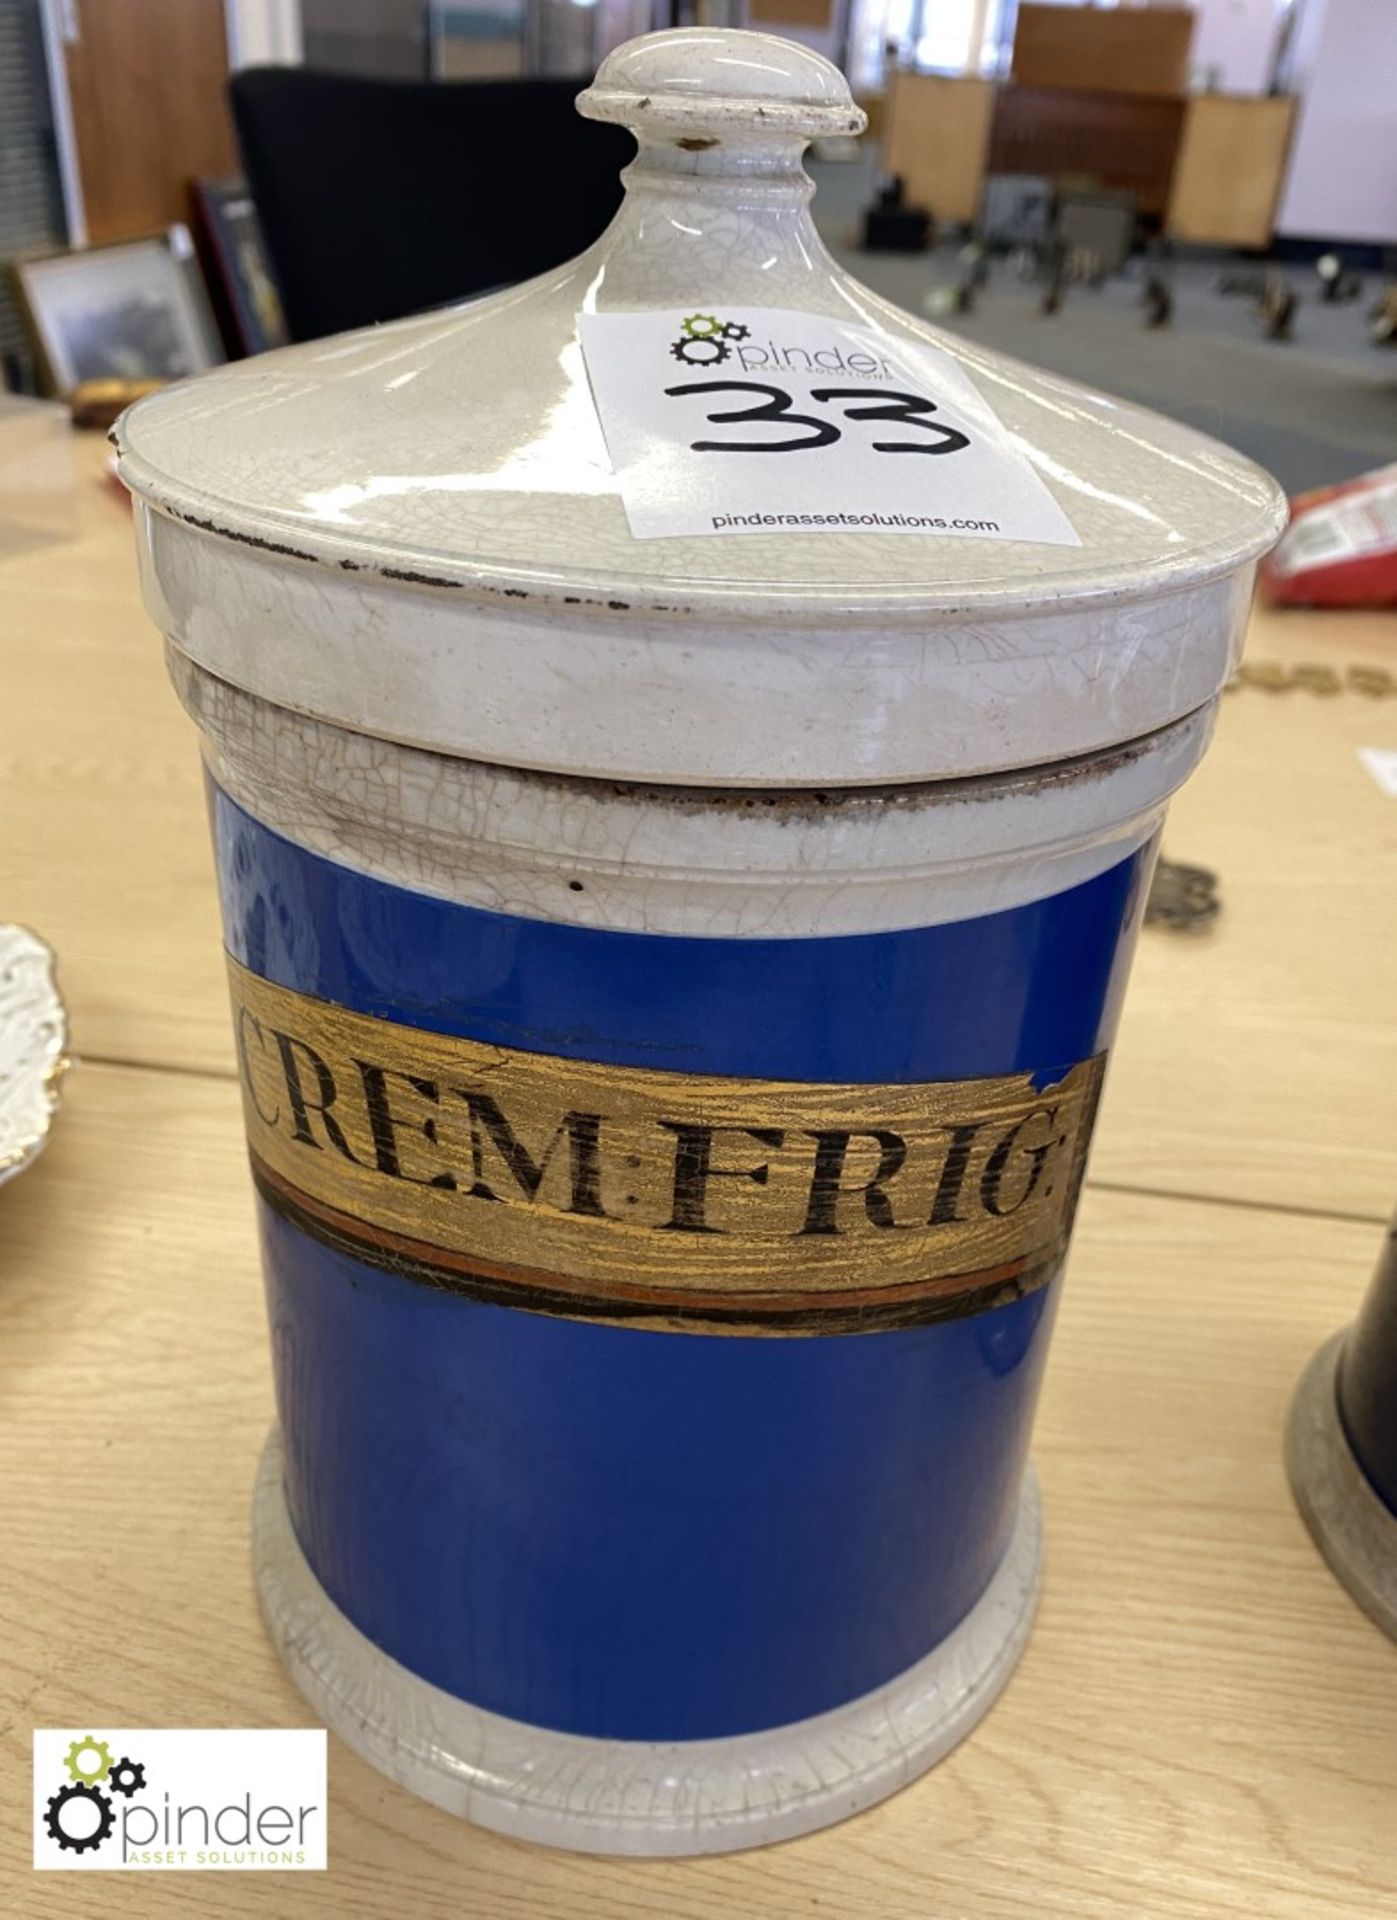 Glazed Storage Pot with lid “Crem:Frig”